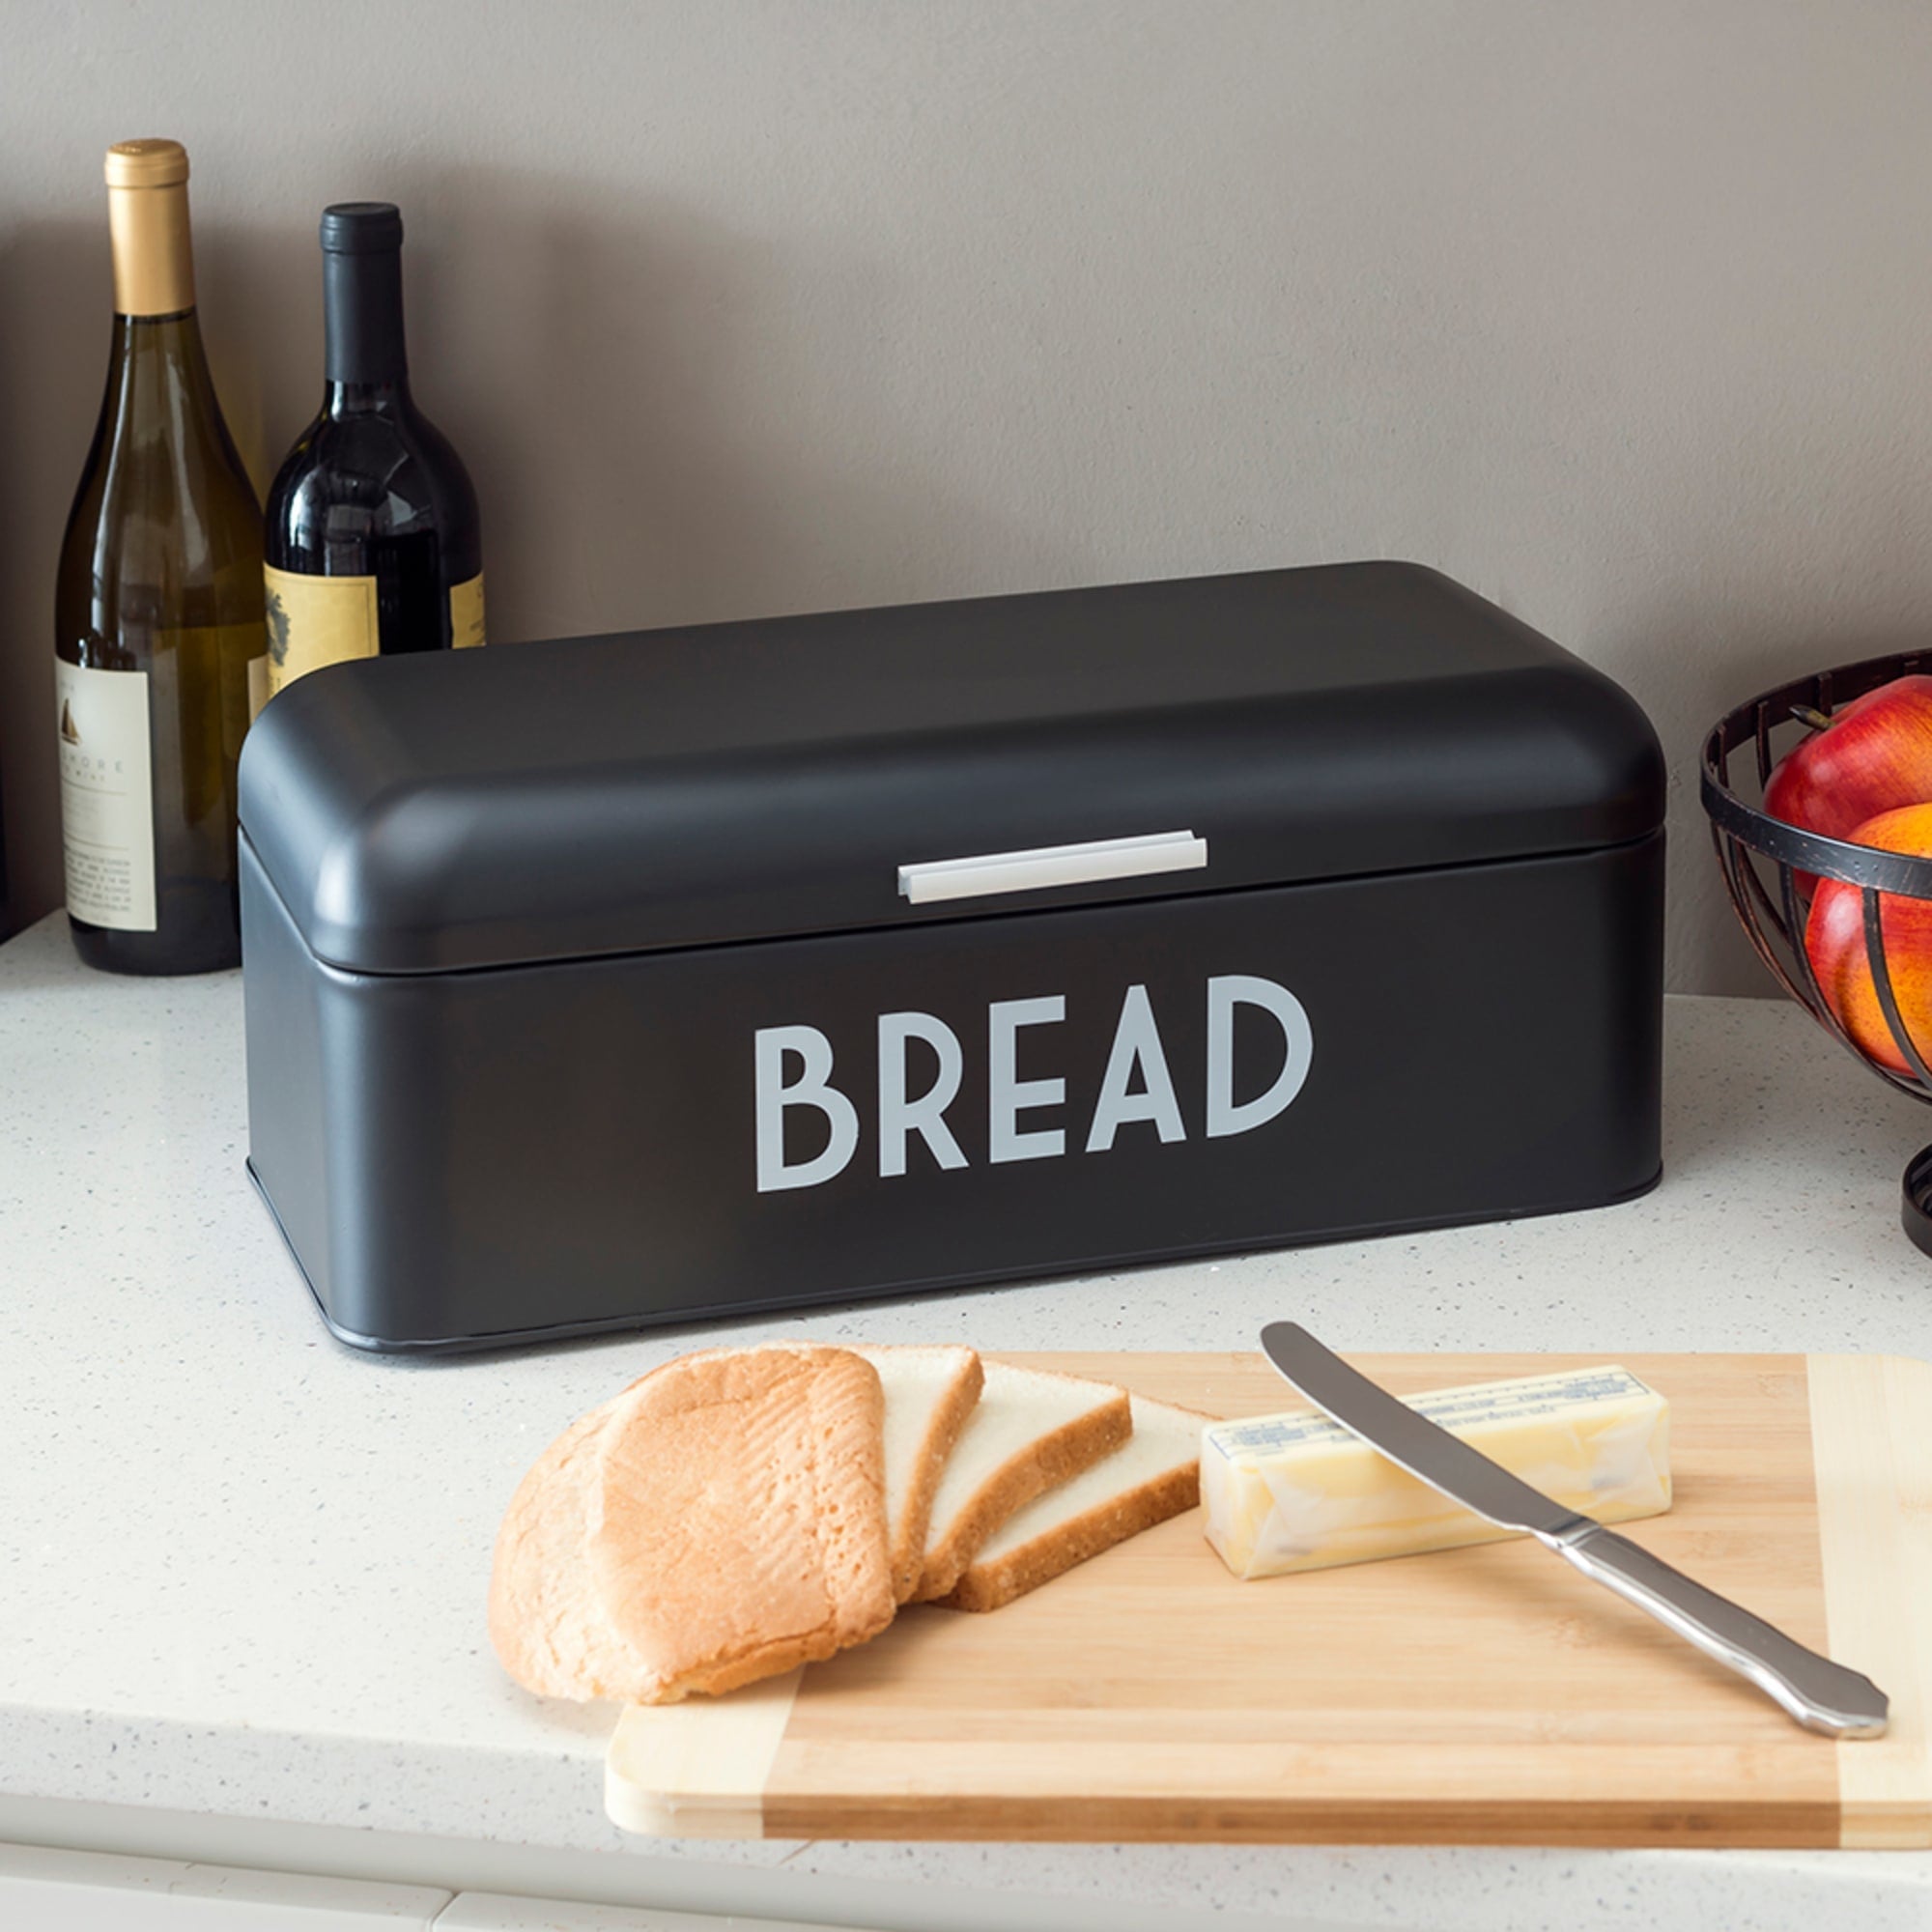 Home Basics Metal Bread Box, Black $25.00 EACH, CASE PACK OF 4